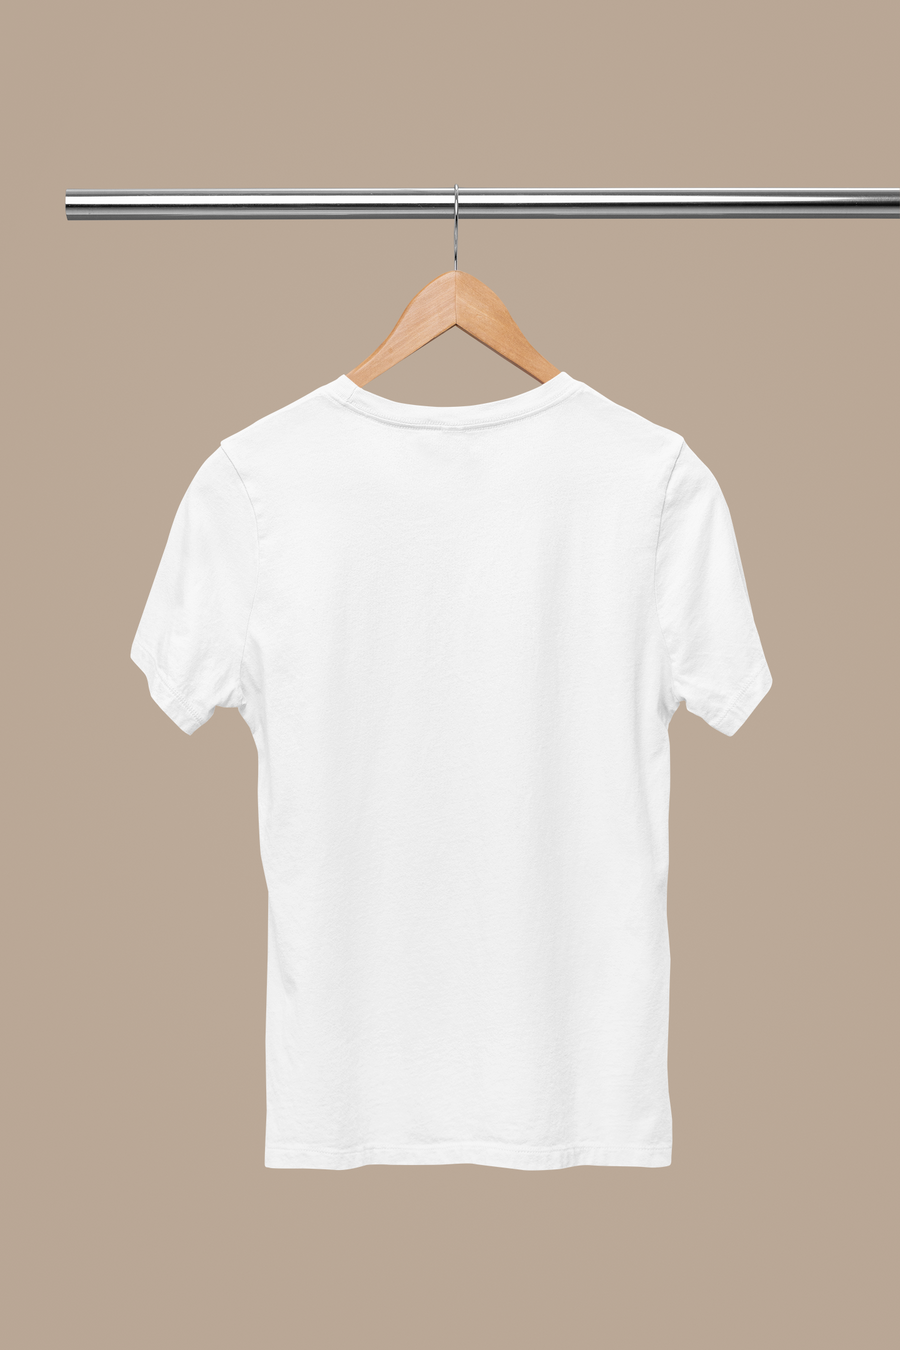 Ener Z White Graphic T-Shirt